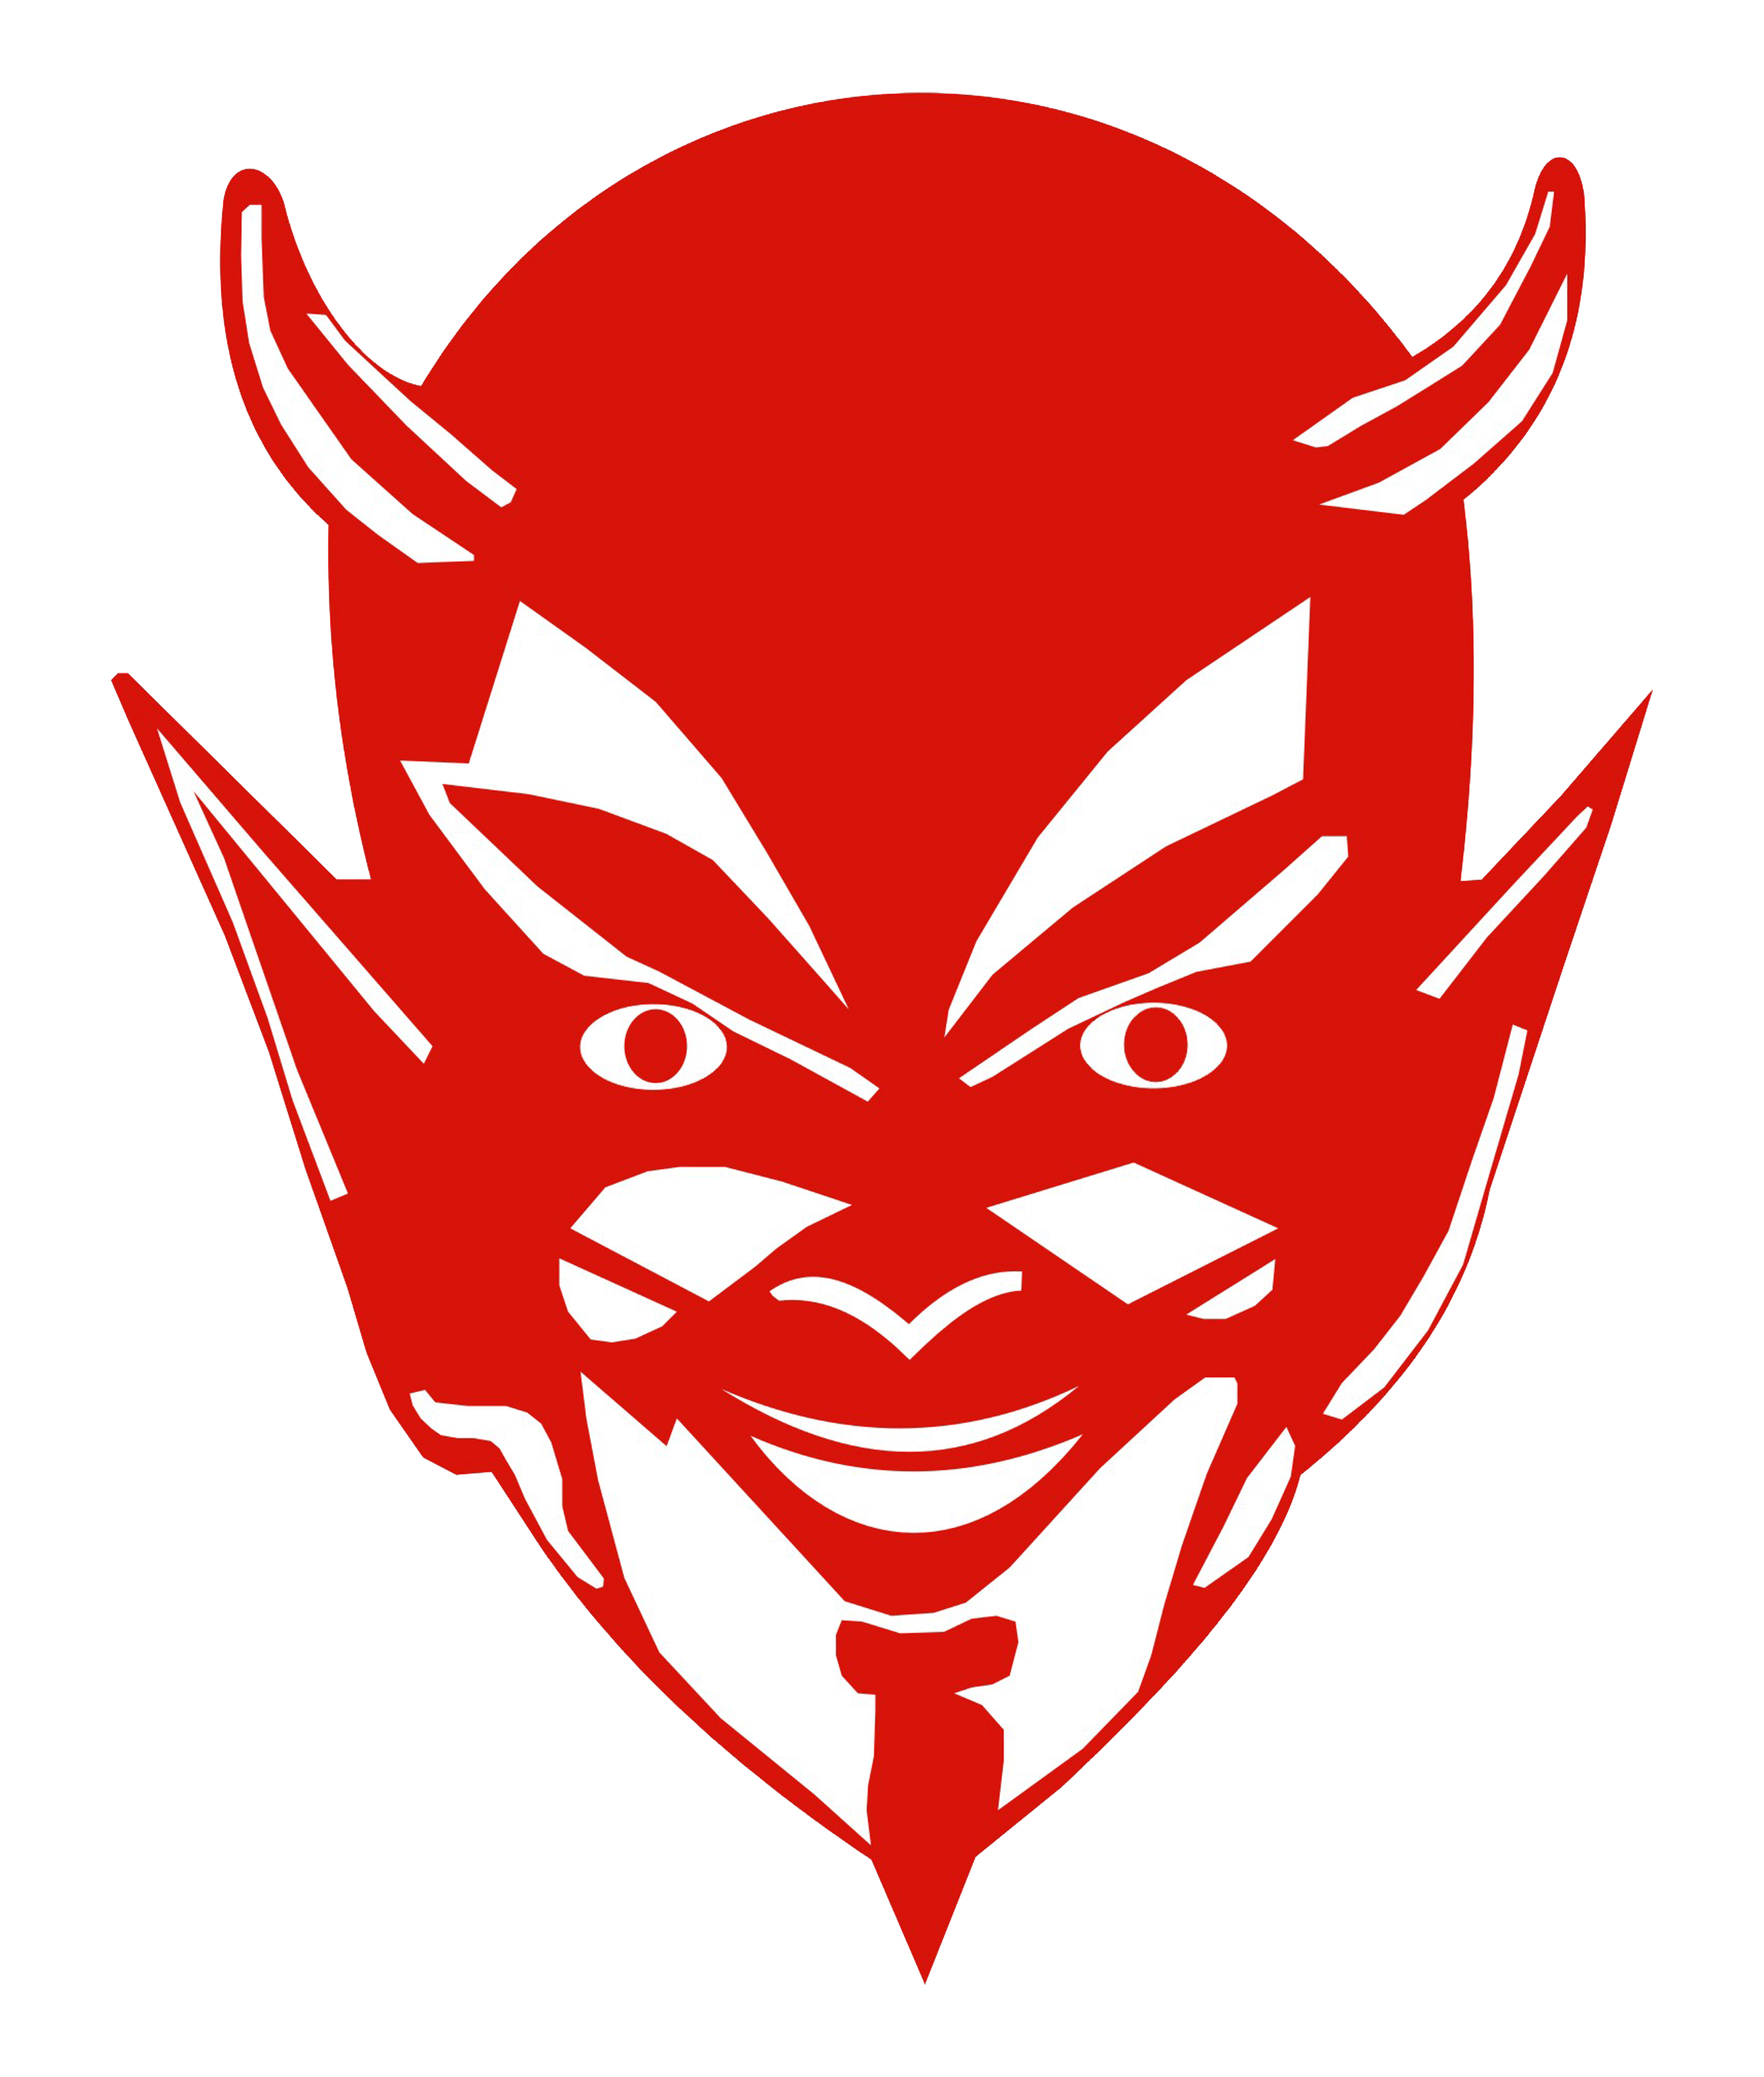 For School Red Devils Logo - Richmond Boys Varsity Tennis - Team Home Richmond Red Devils Sports